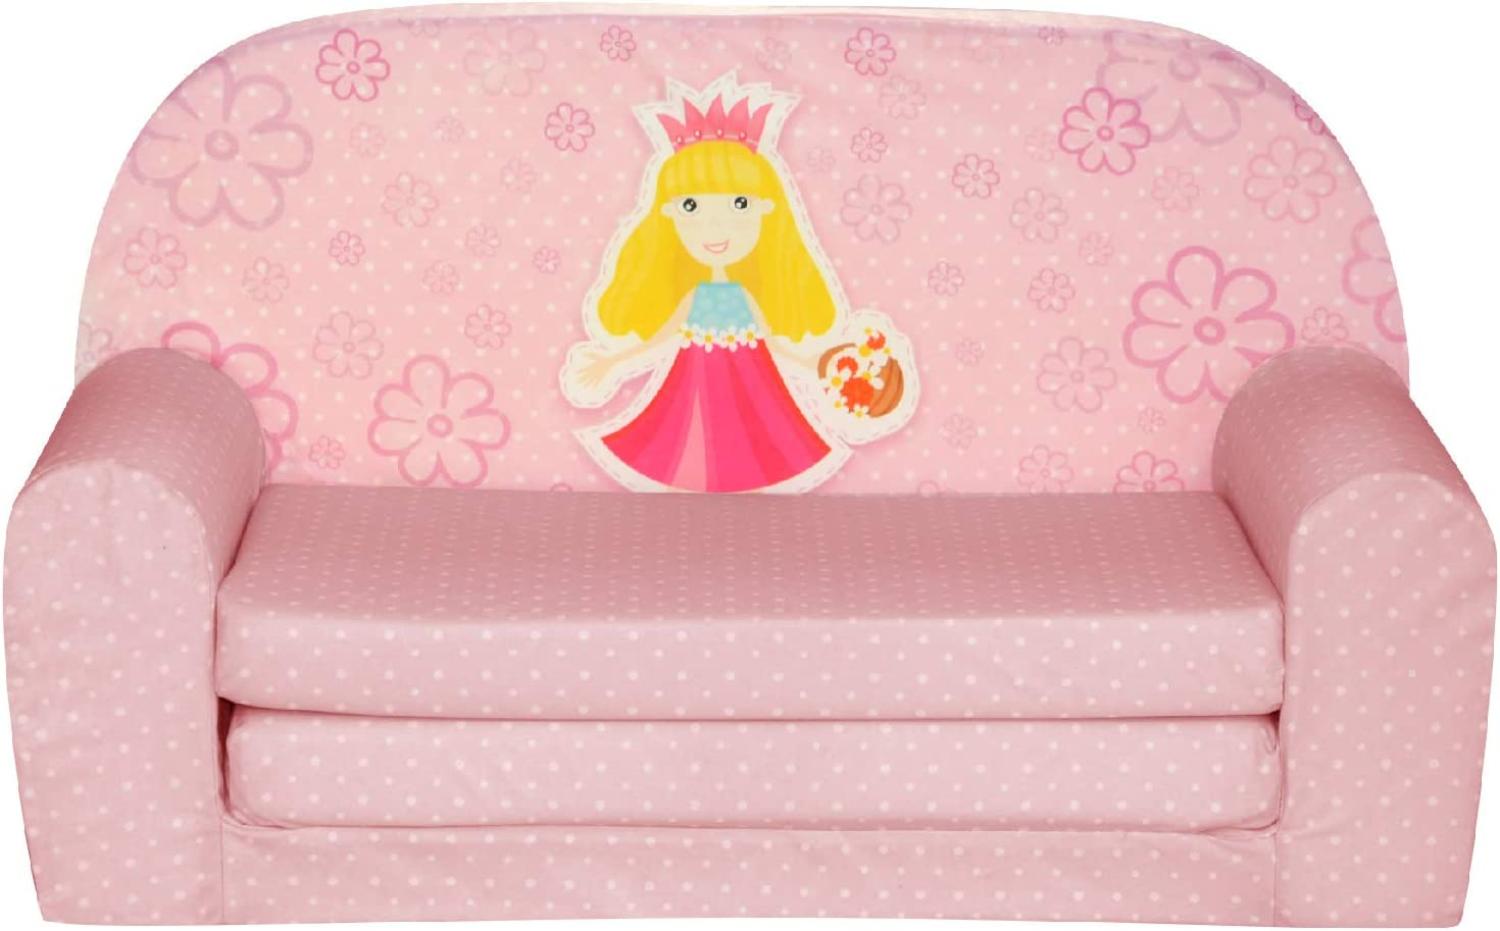 Fortisline 'Prinzessin' Kindersofa Mini zum Aufklappen Bild 1